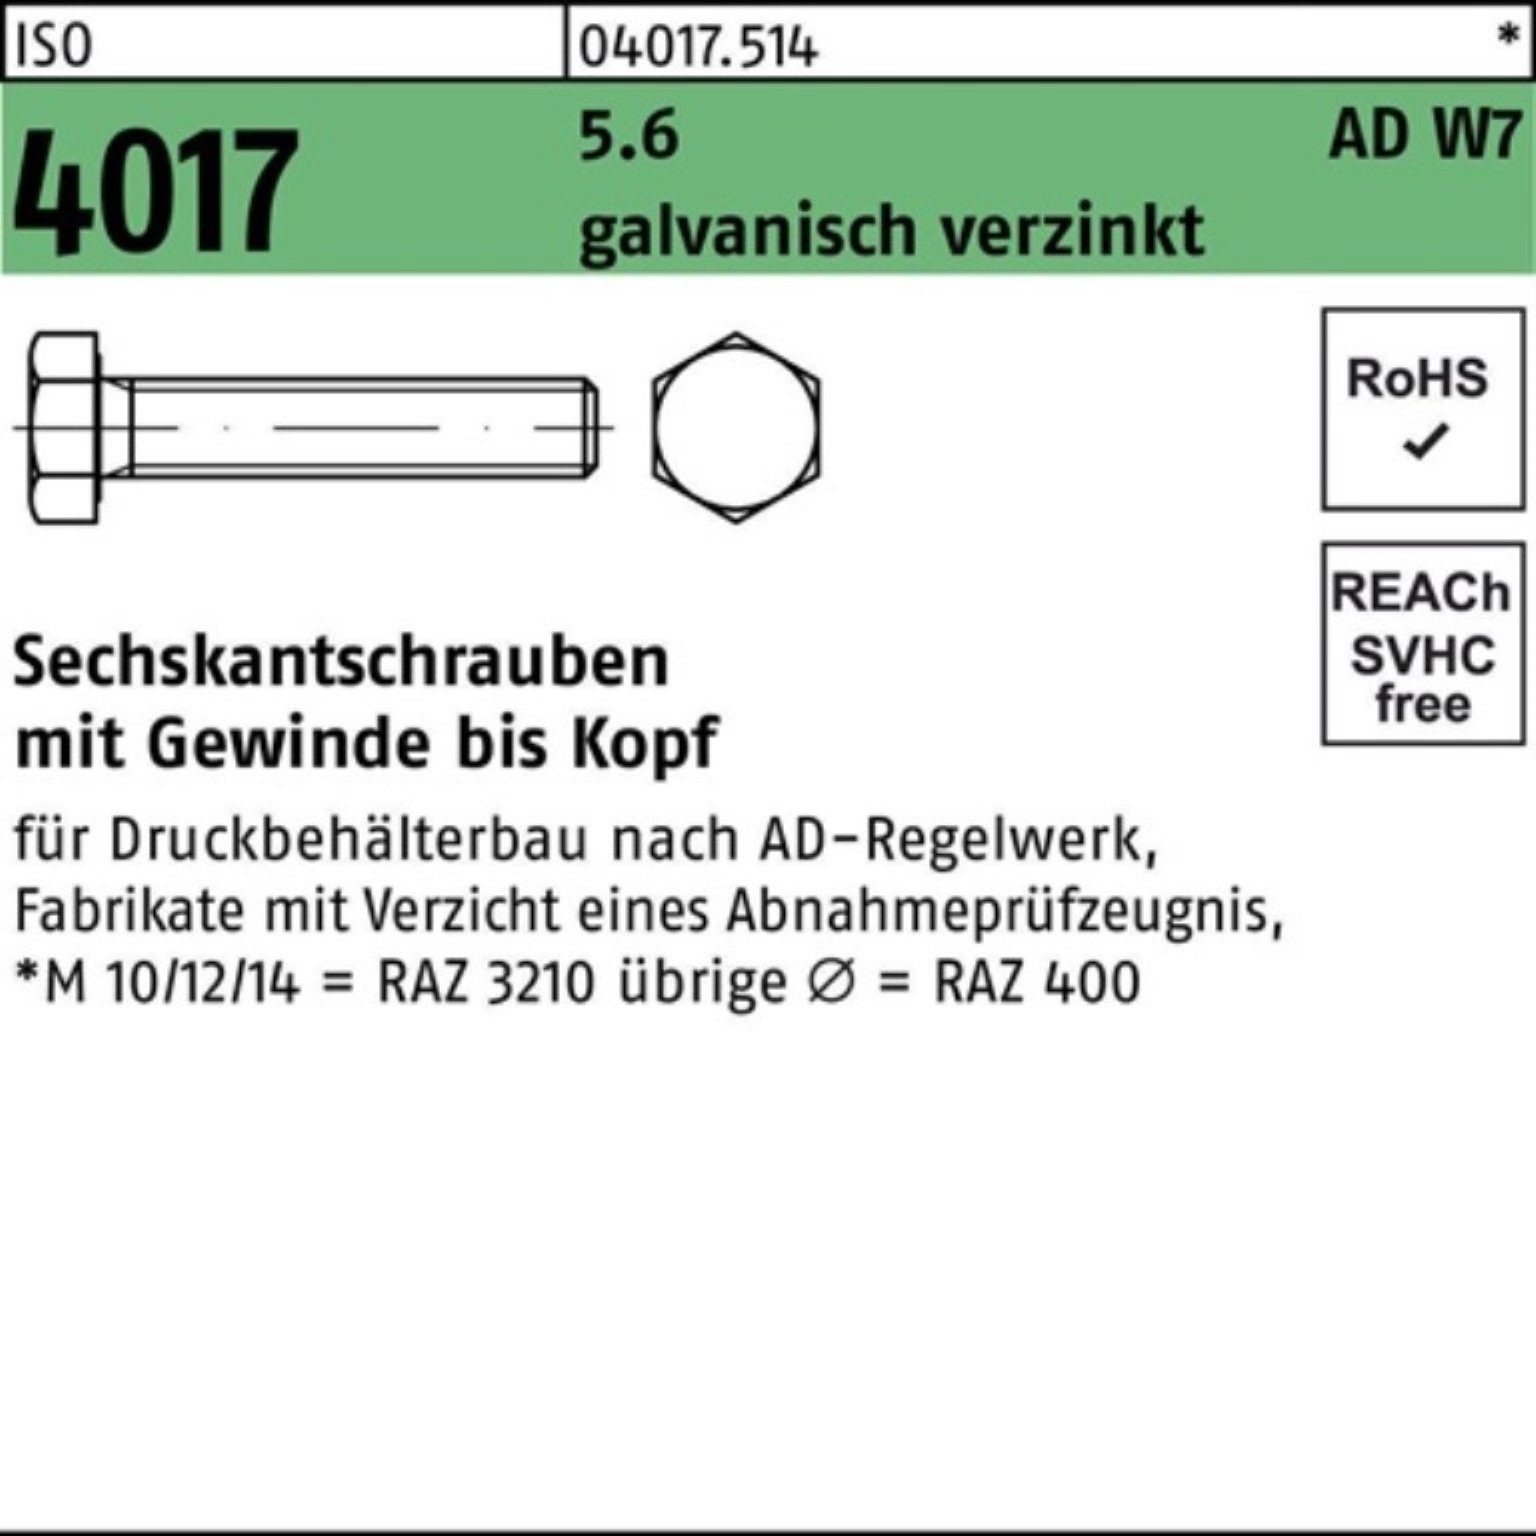 AD W7 Bufab galv.verz. 5.6 VG 4017 ISO 100 Sechskantschraube 100er Sechskantschraube Pack M27x